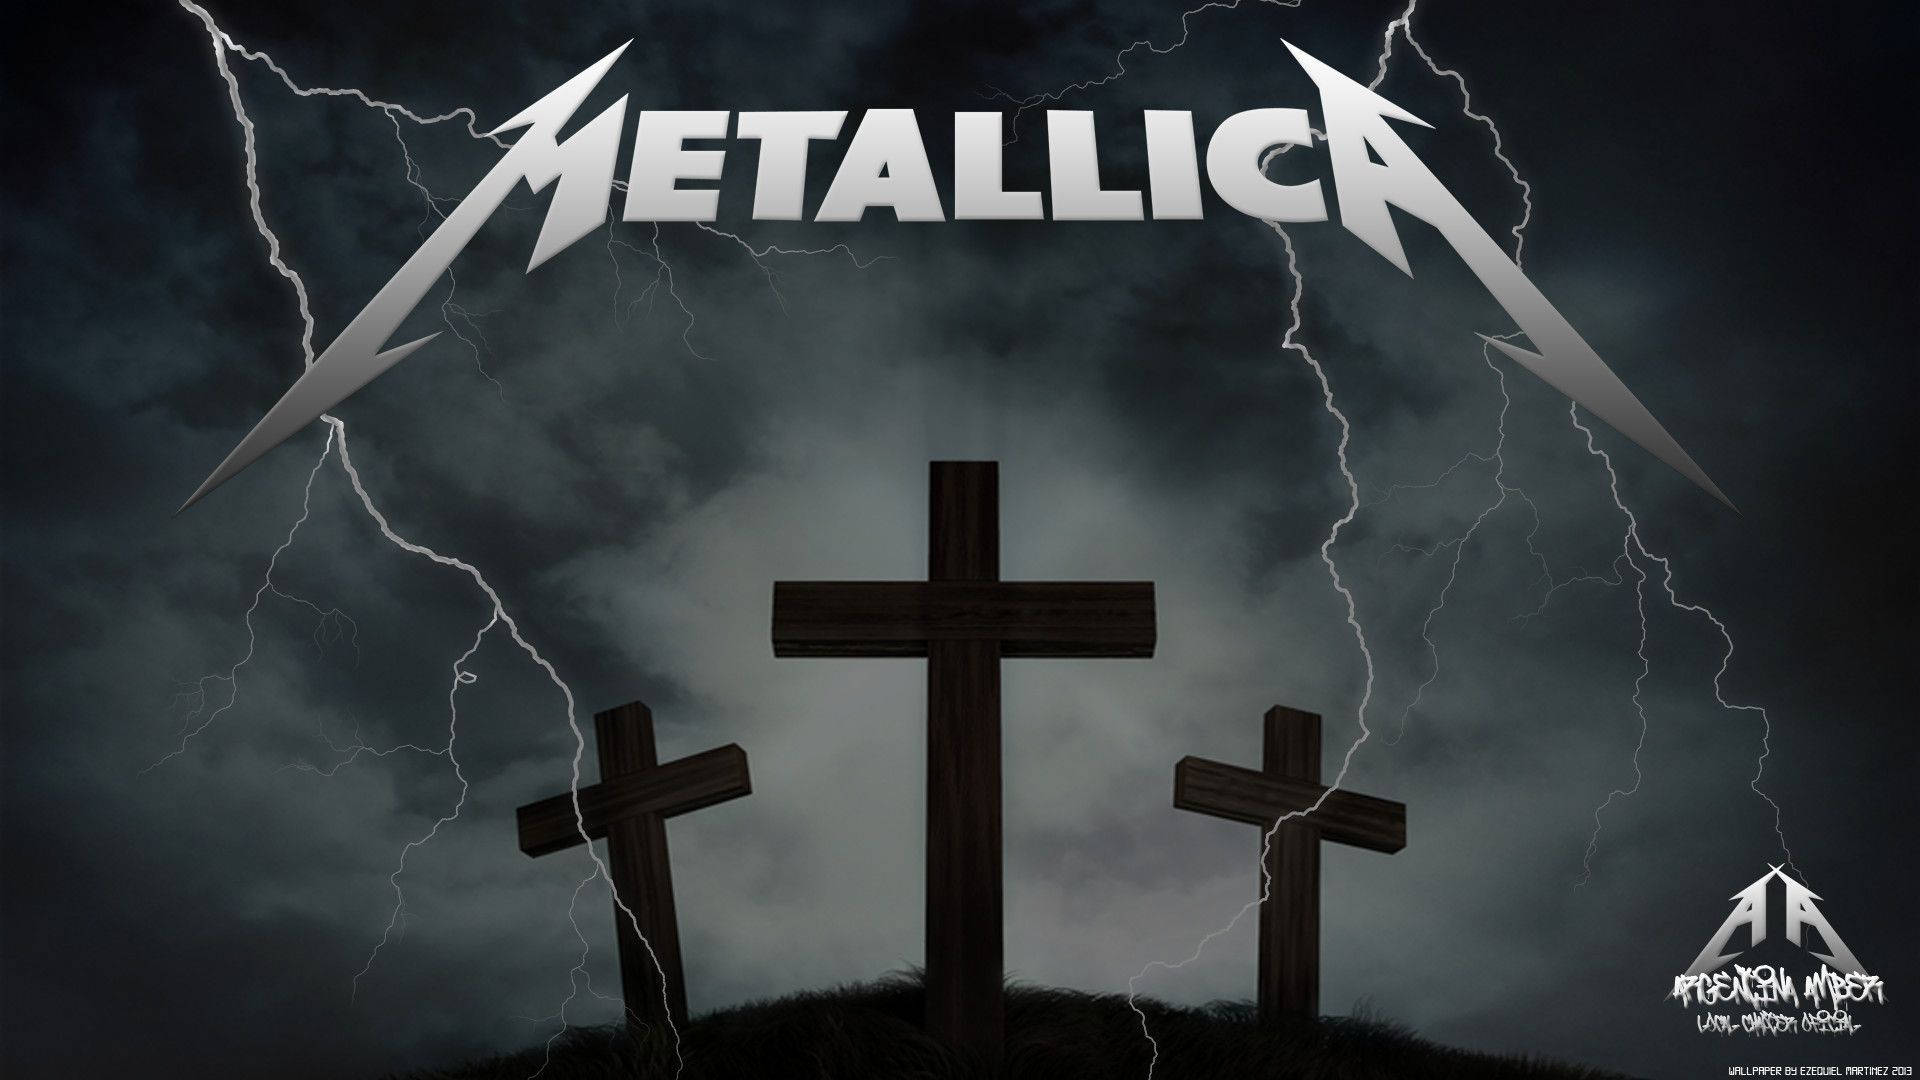 The legendary thrash metal gods Metallica perform their defining "Master of Puppets" album Wallpaper